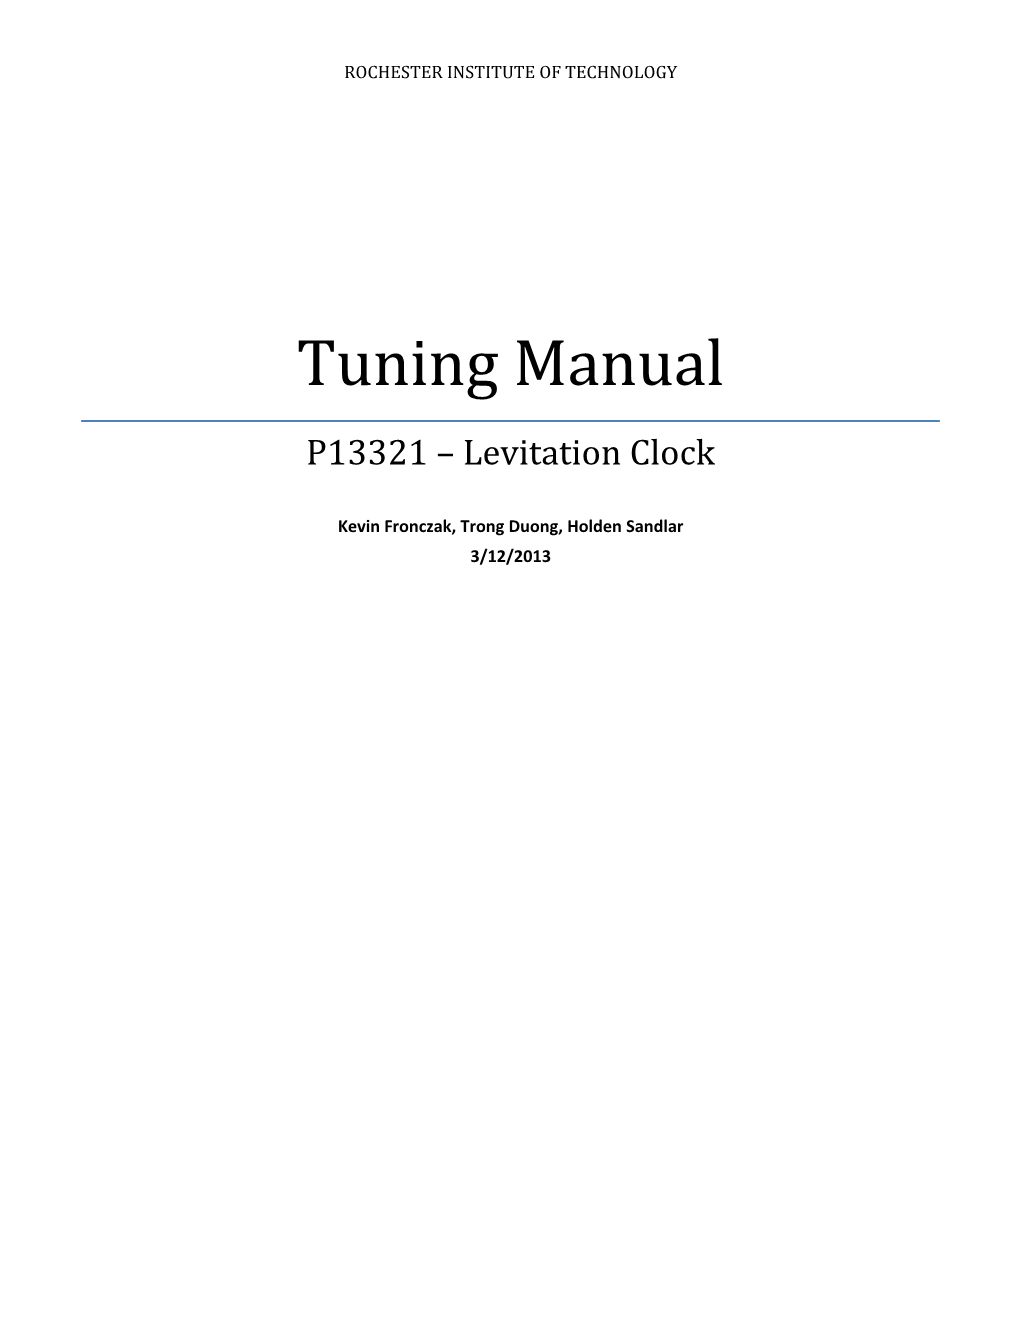 Levitation Clock Tuning Manual P13321-DOC-TUNEW